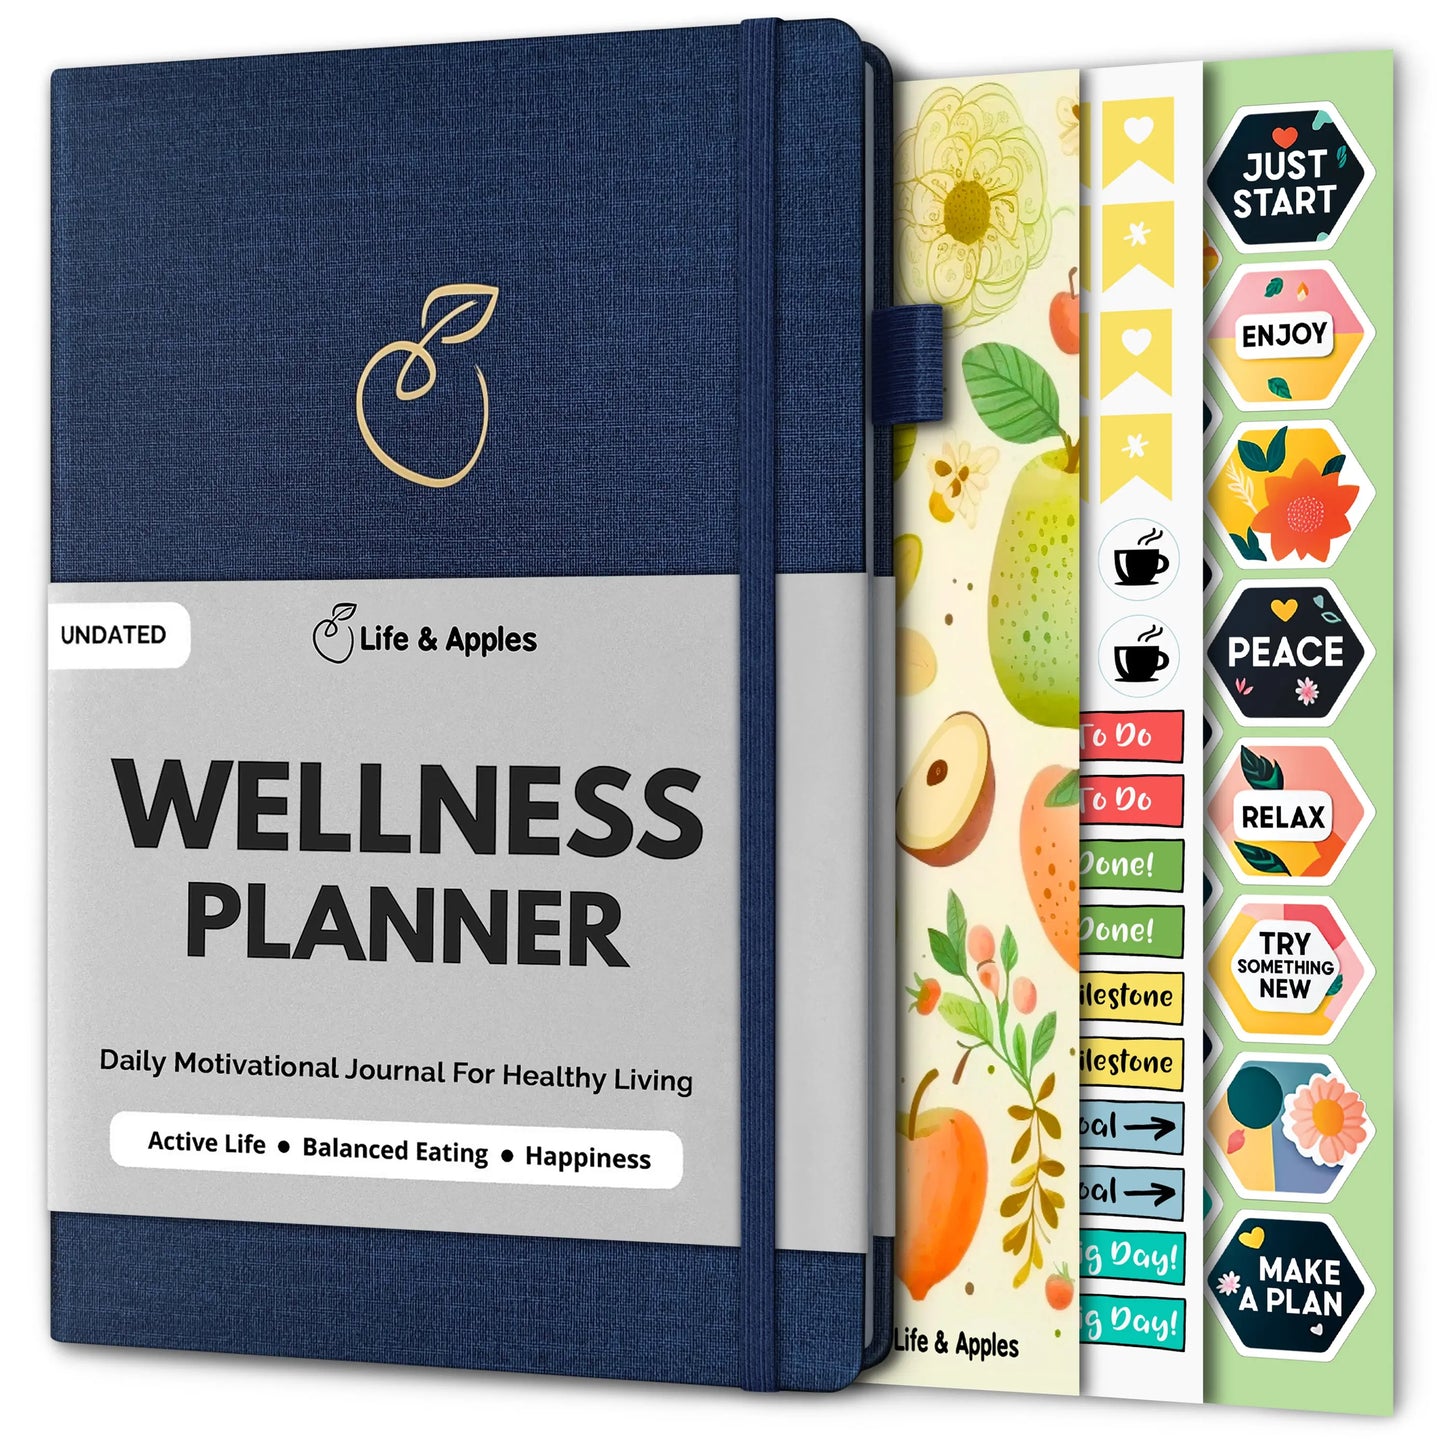 The Wellness Planner